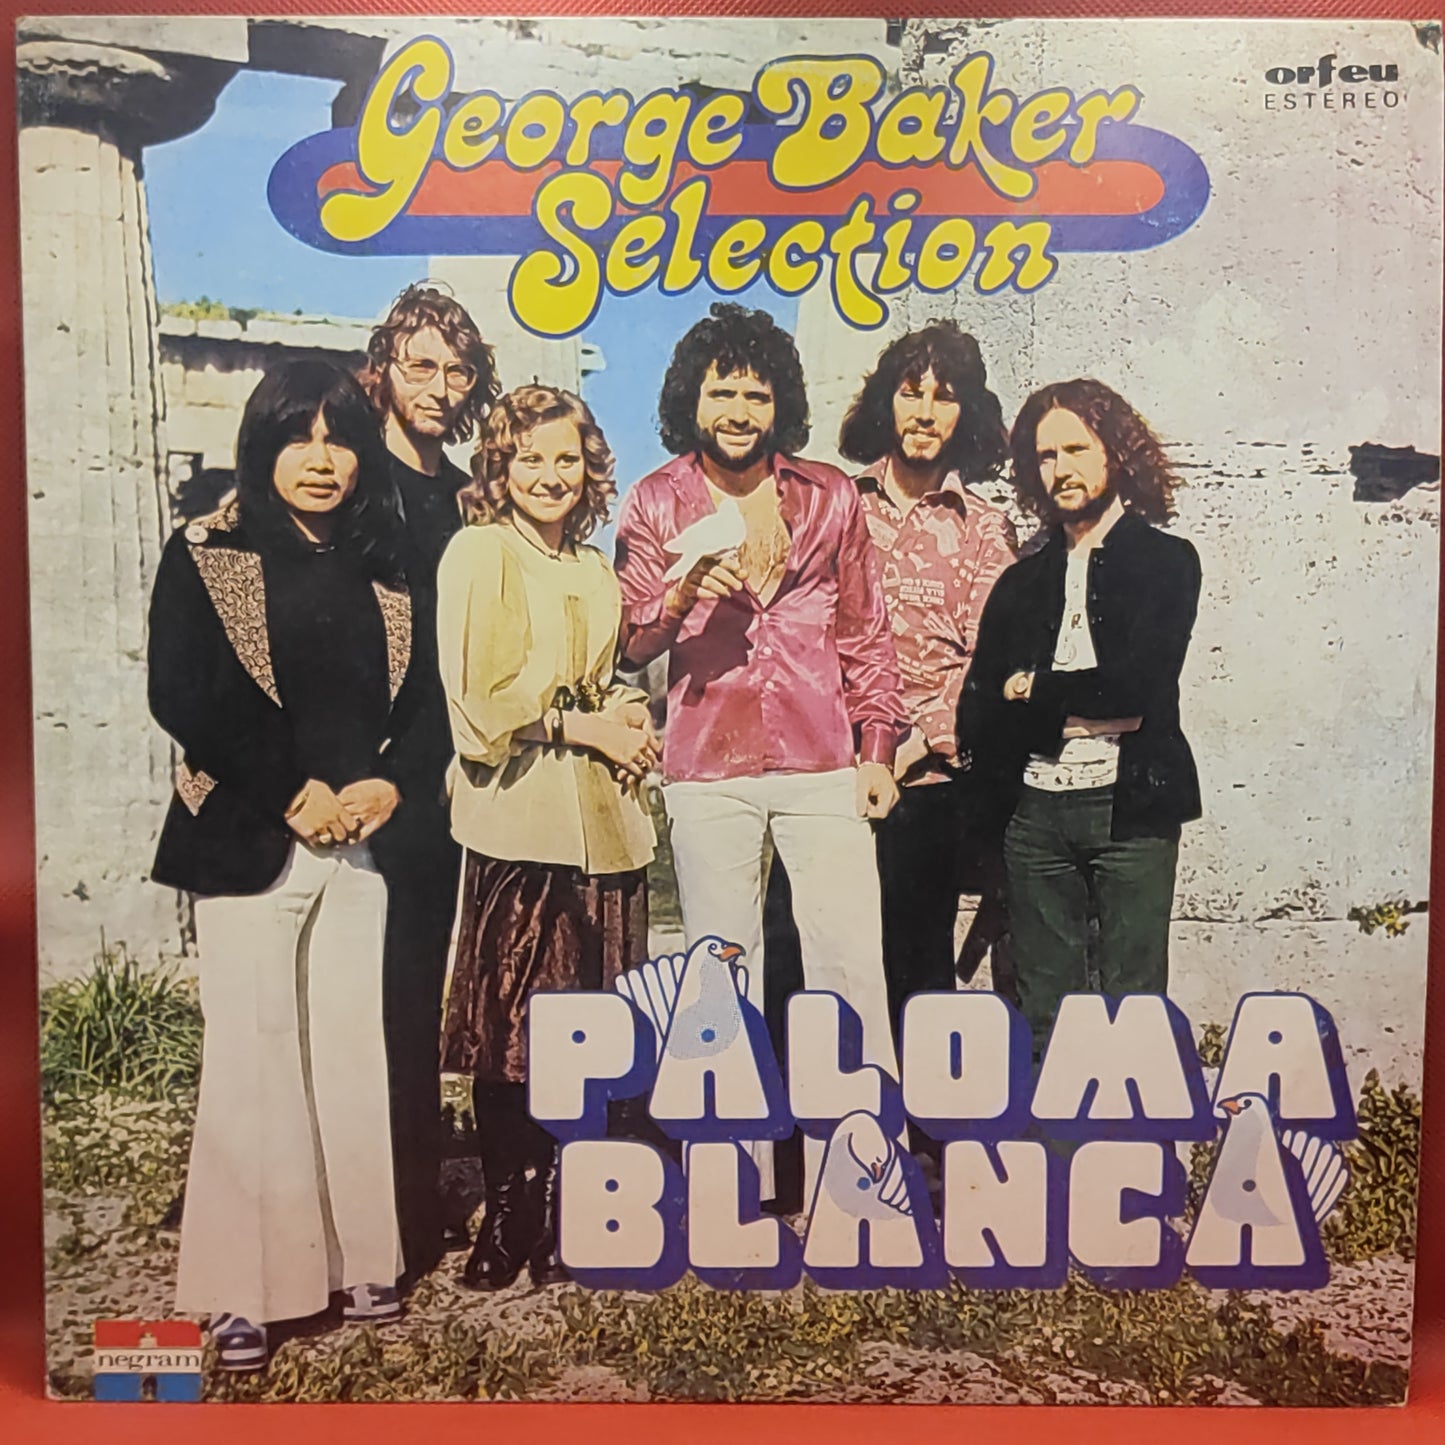 George Baker Selection – Paloma Blanca